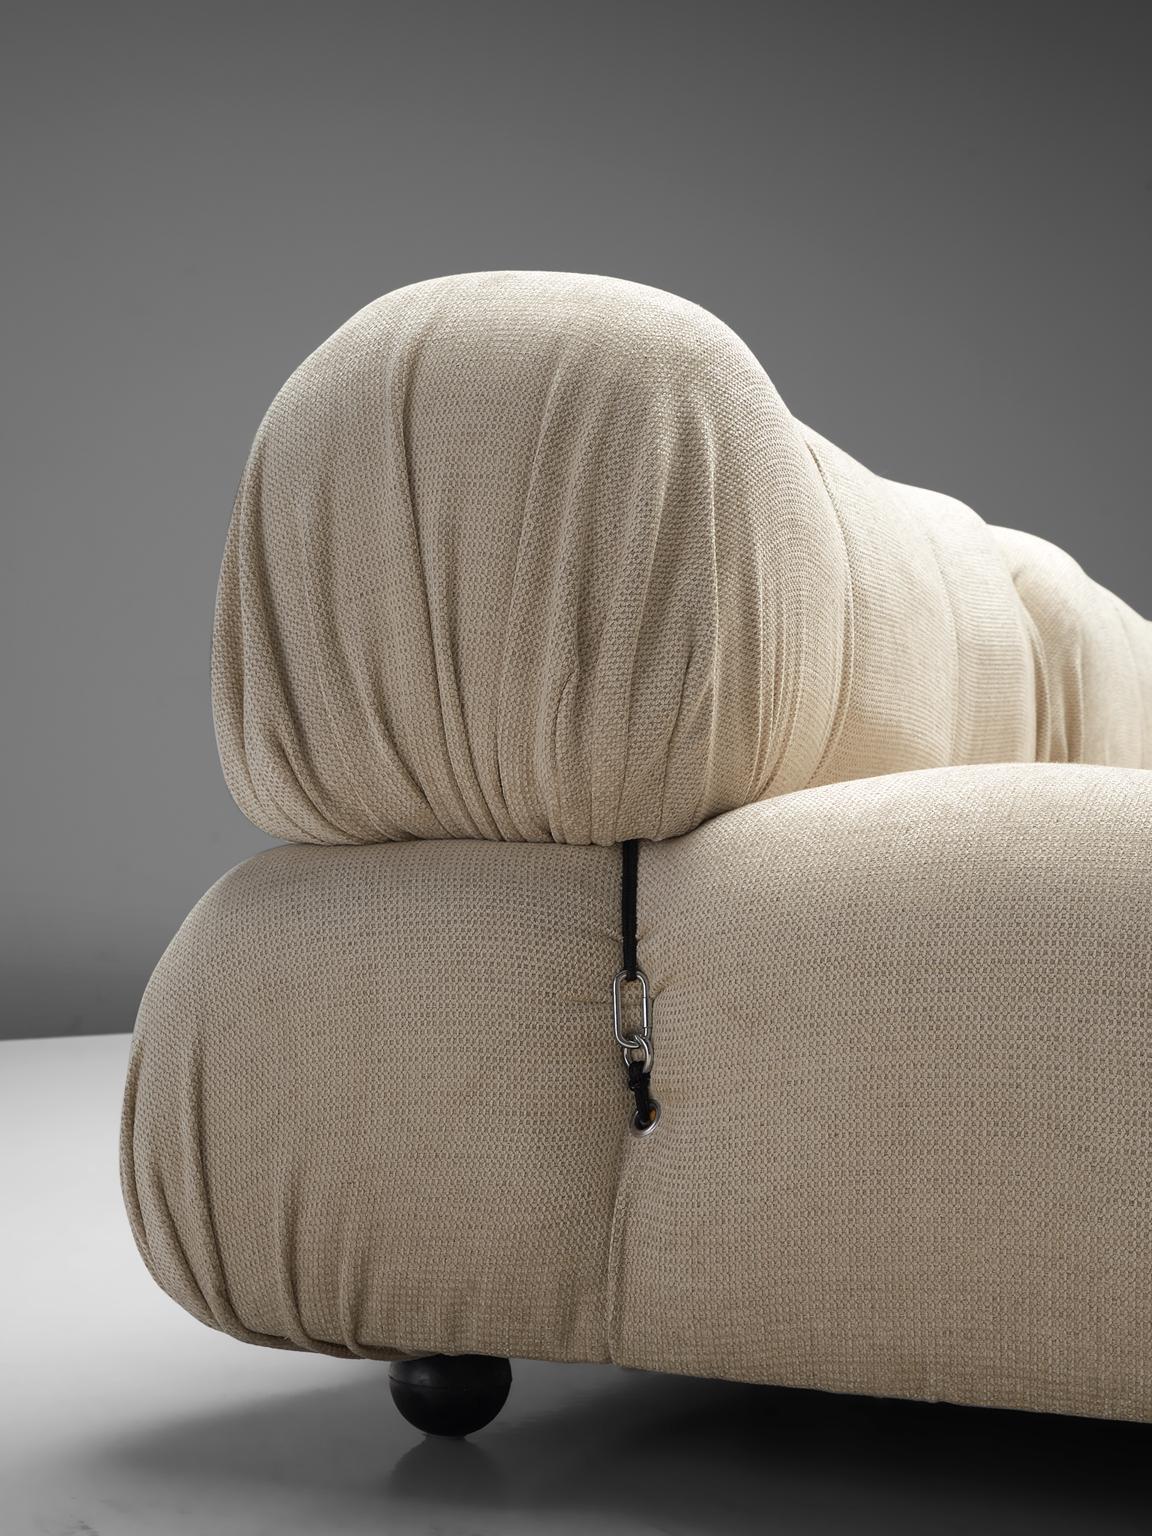 Mario Bellini 'Camaleonda' Modular Sofa Reupholstered in Ivory White Fabric 2